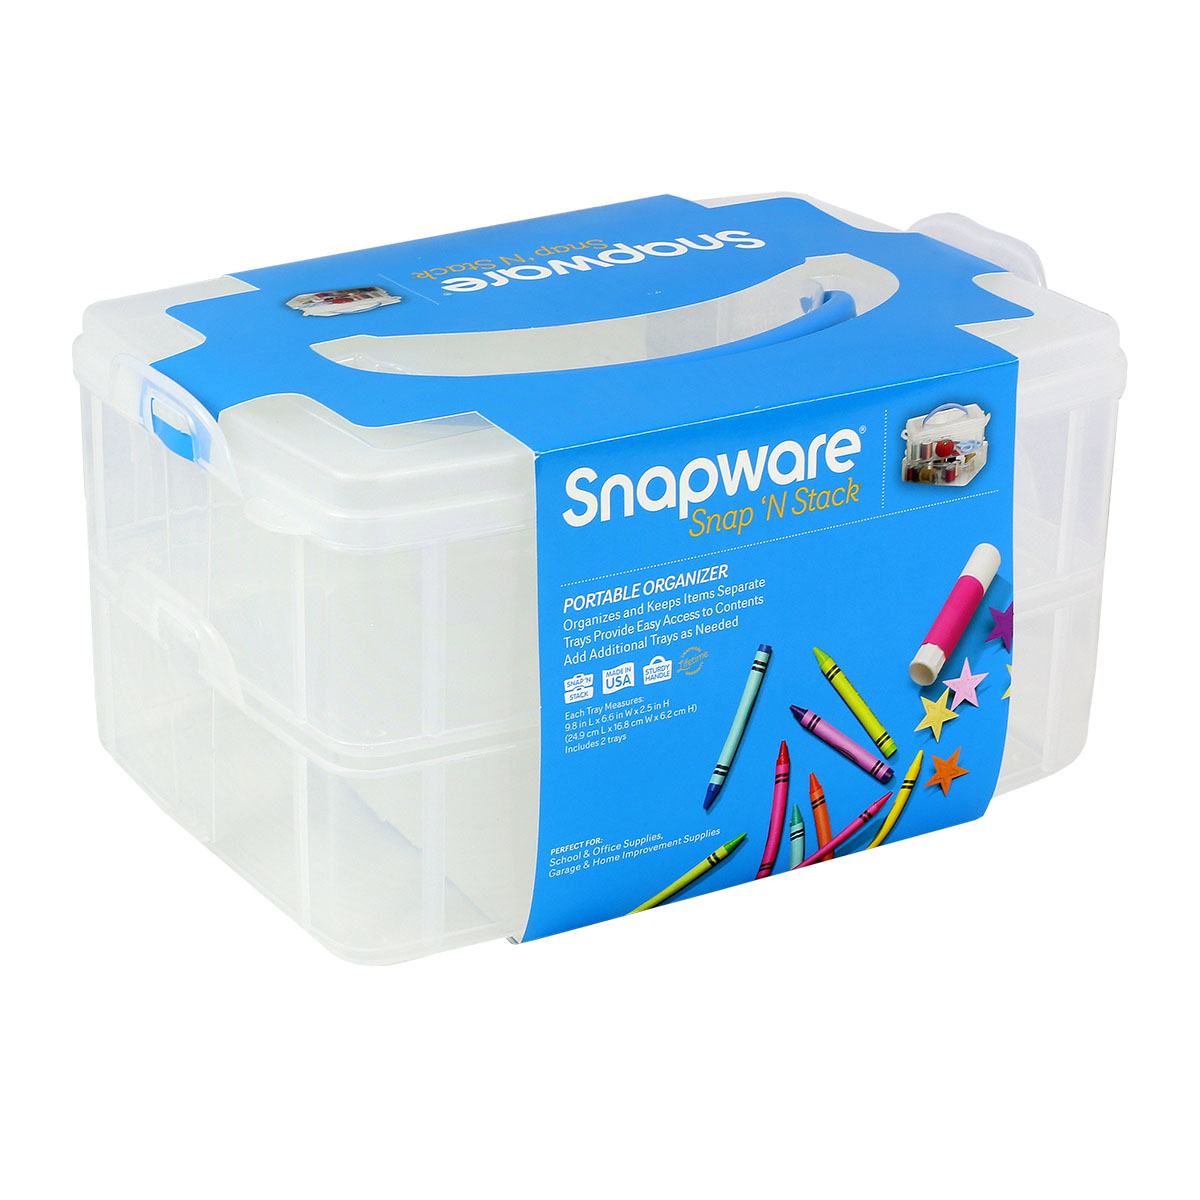 Snapware® Snap'n Stack Portable Organizer